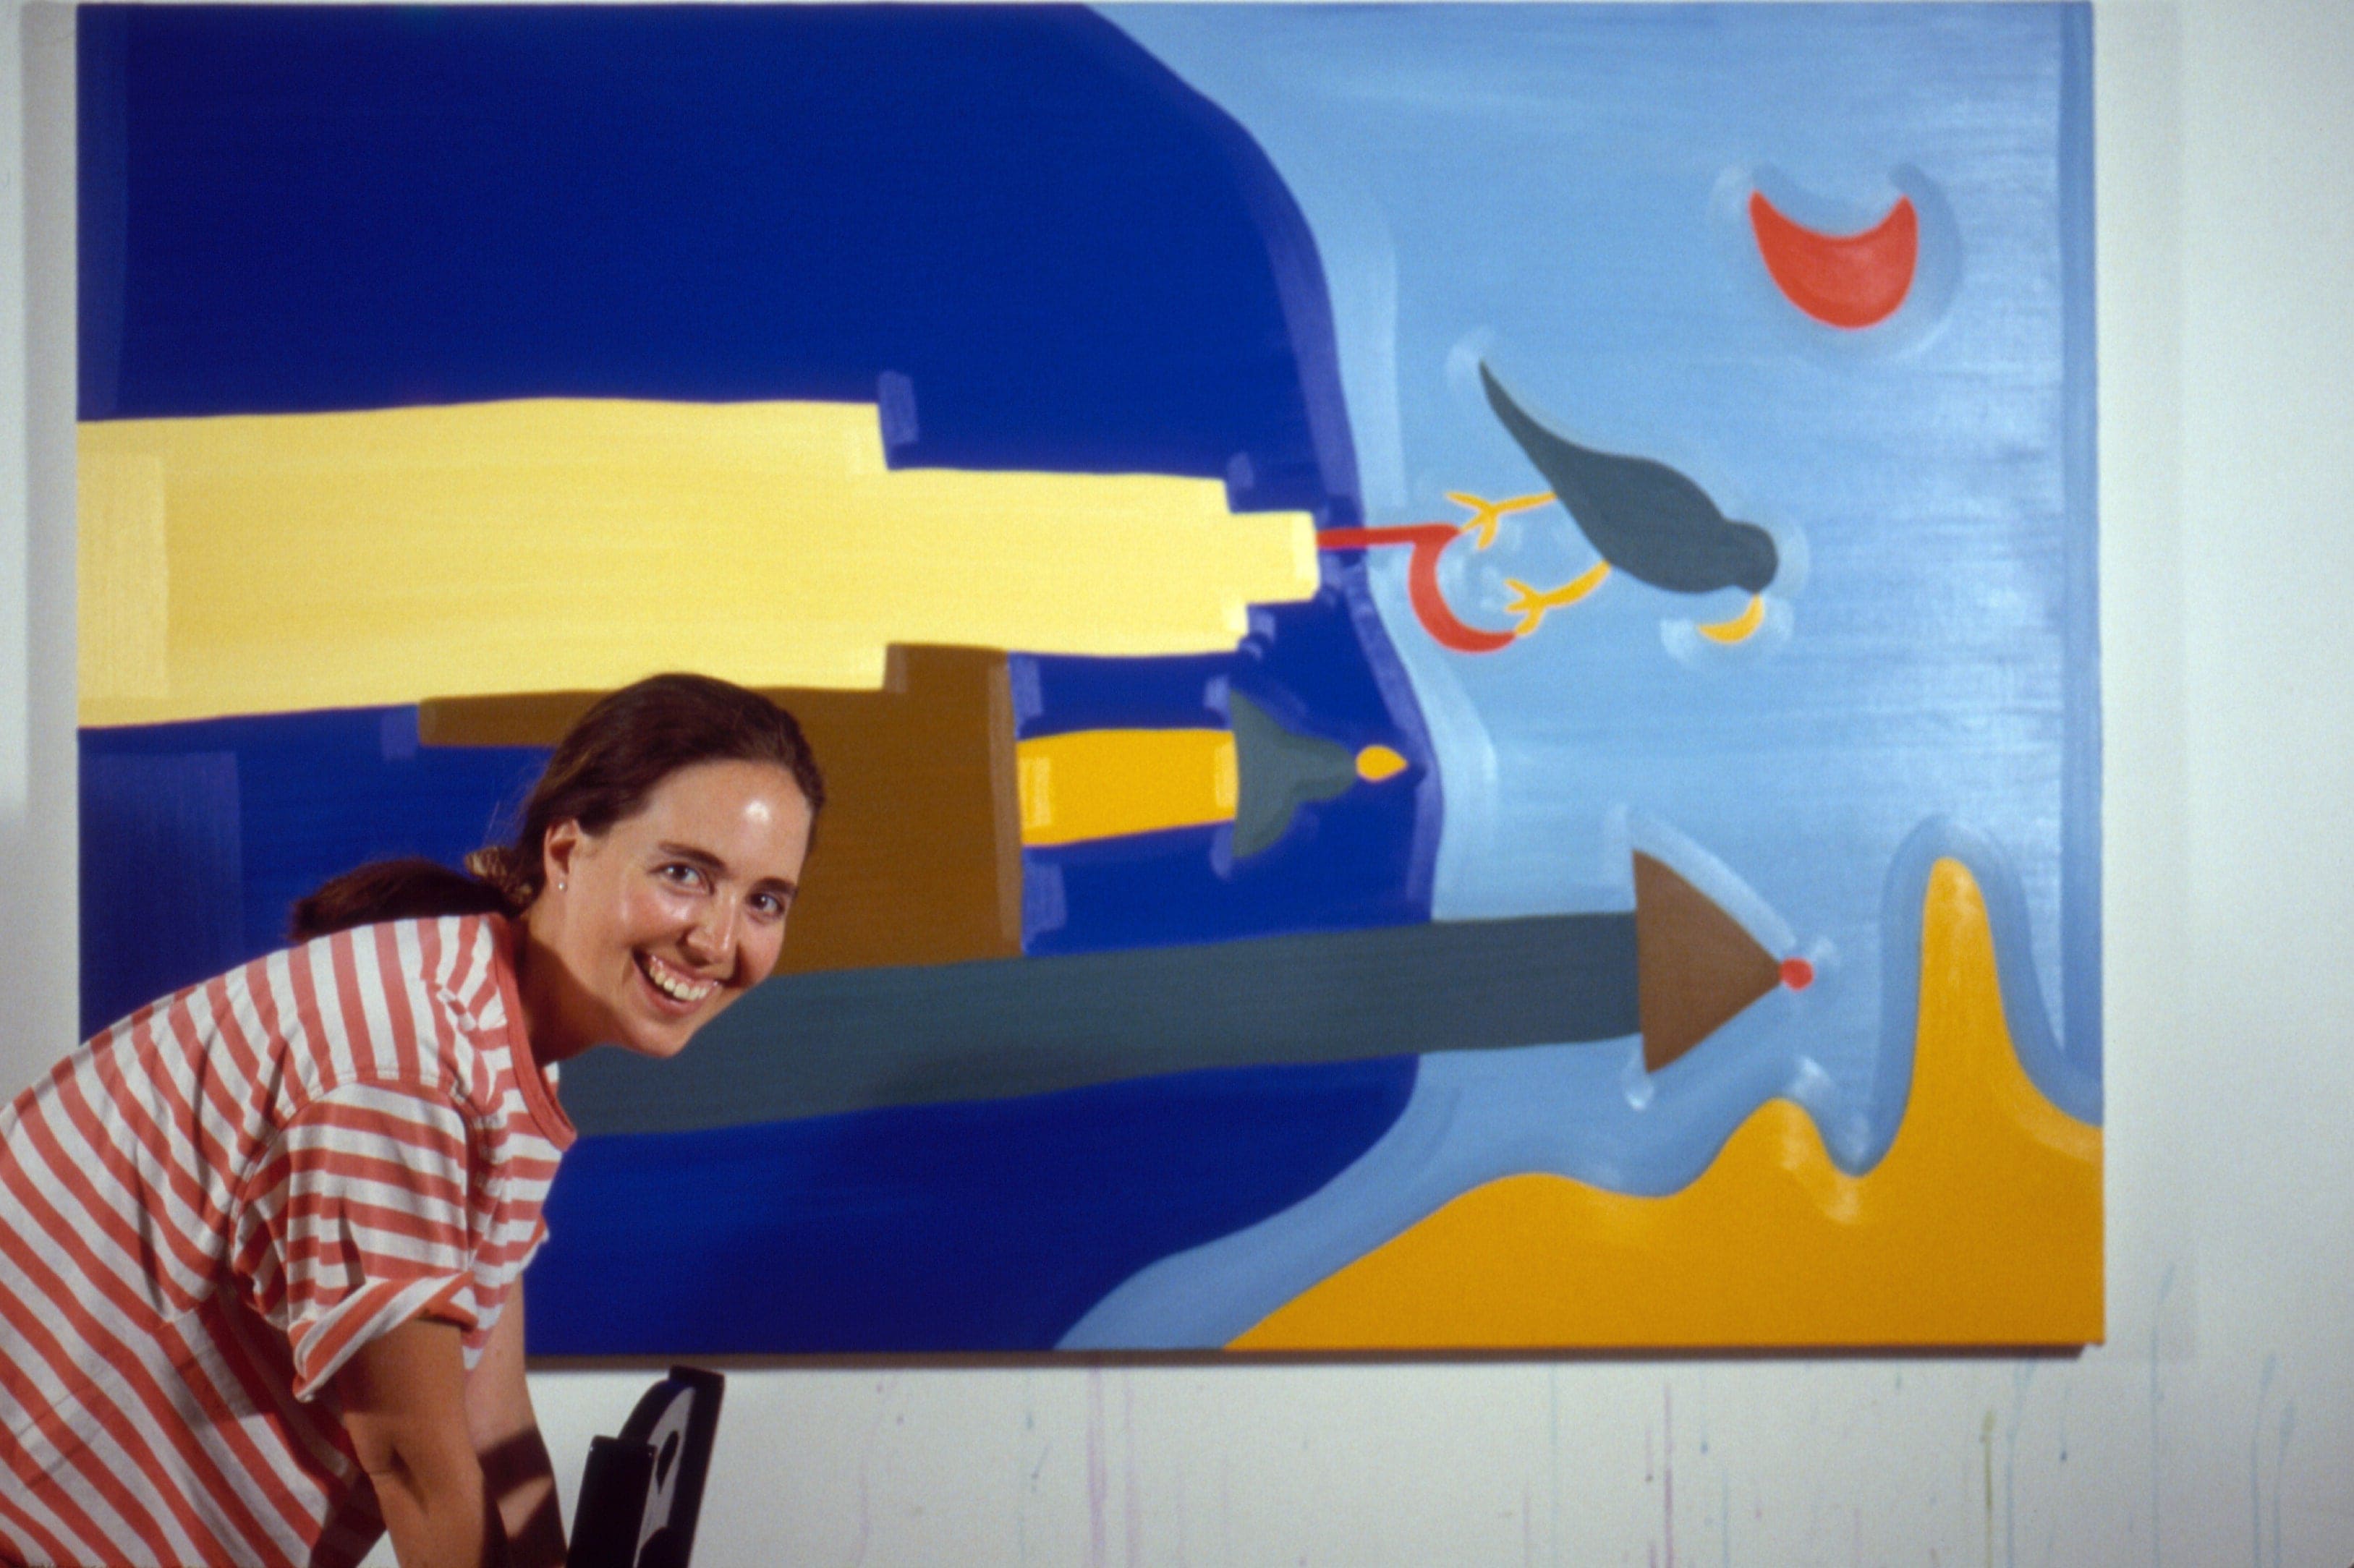 Manhattan Cristina Rodriguez Studio at New York, USA in 1995